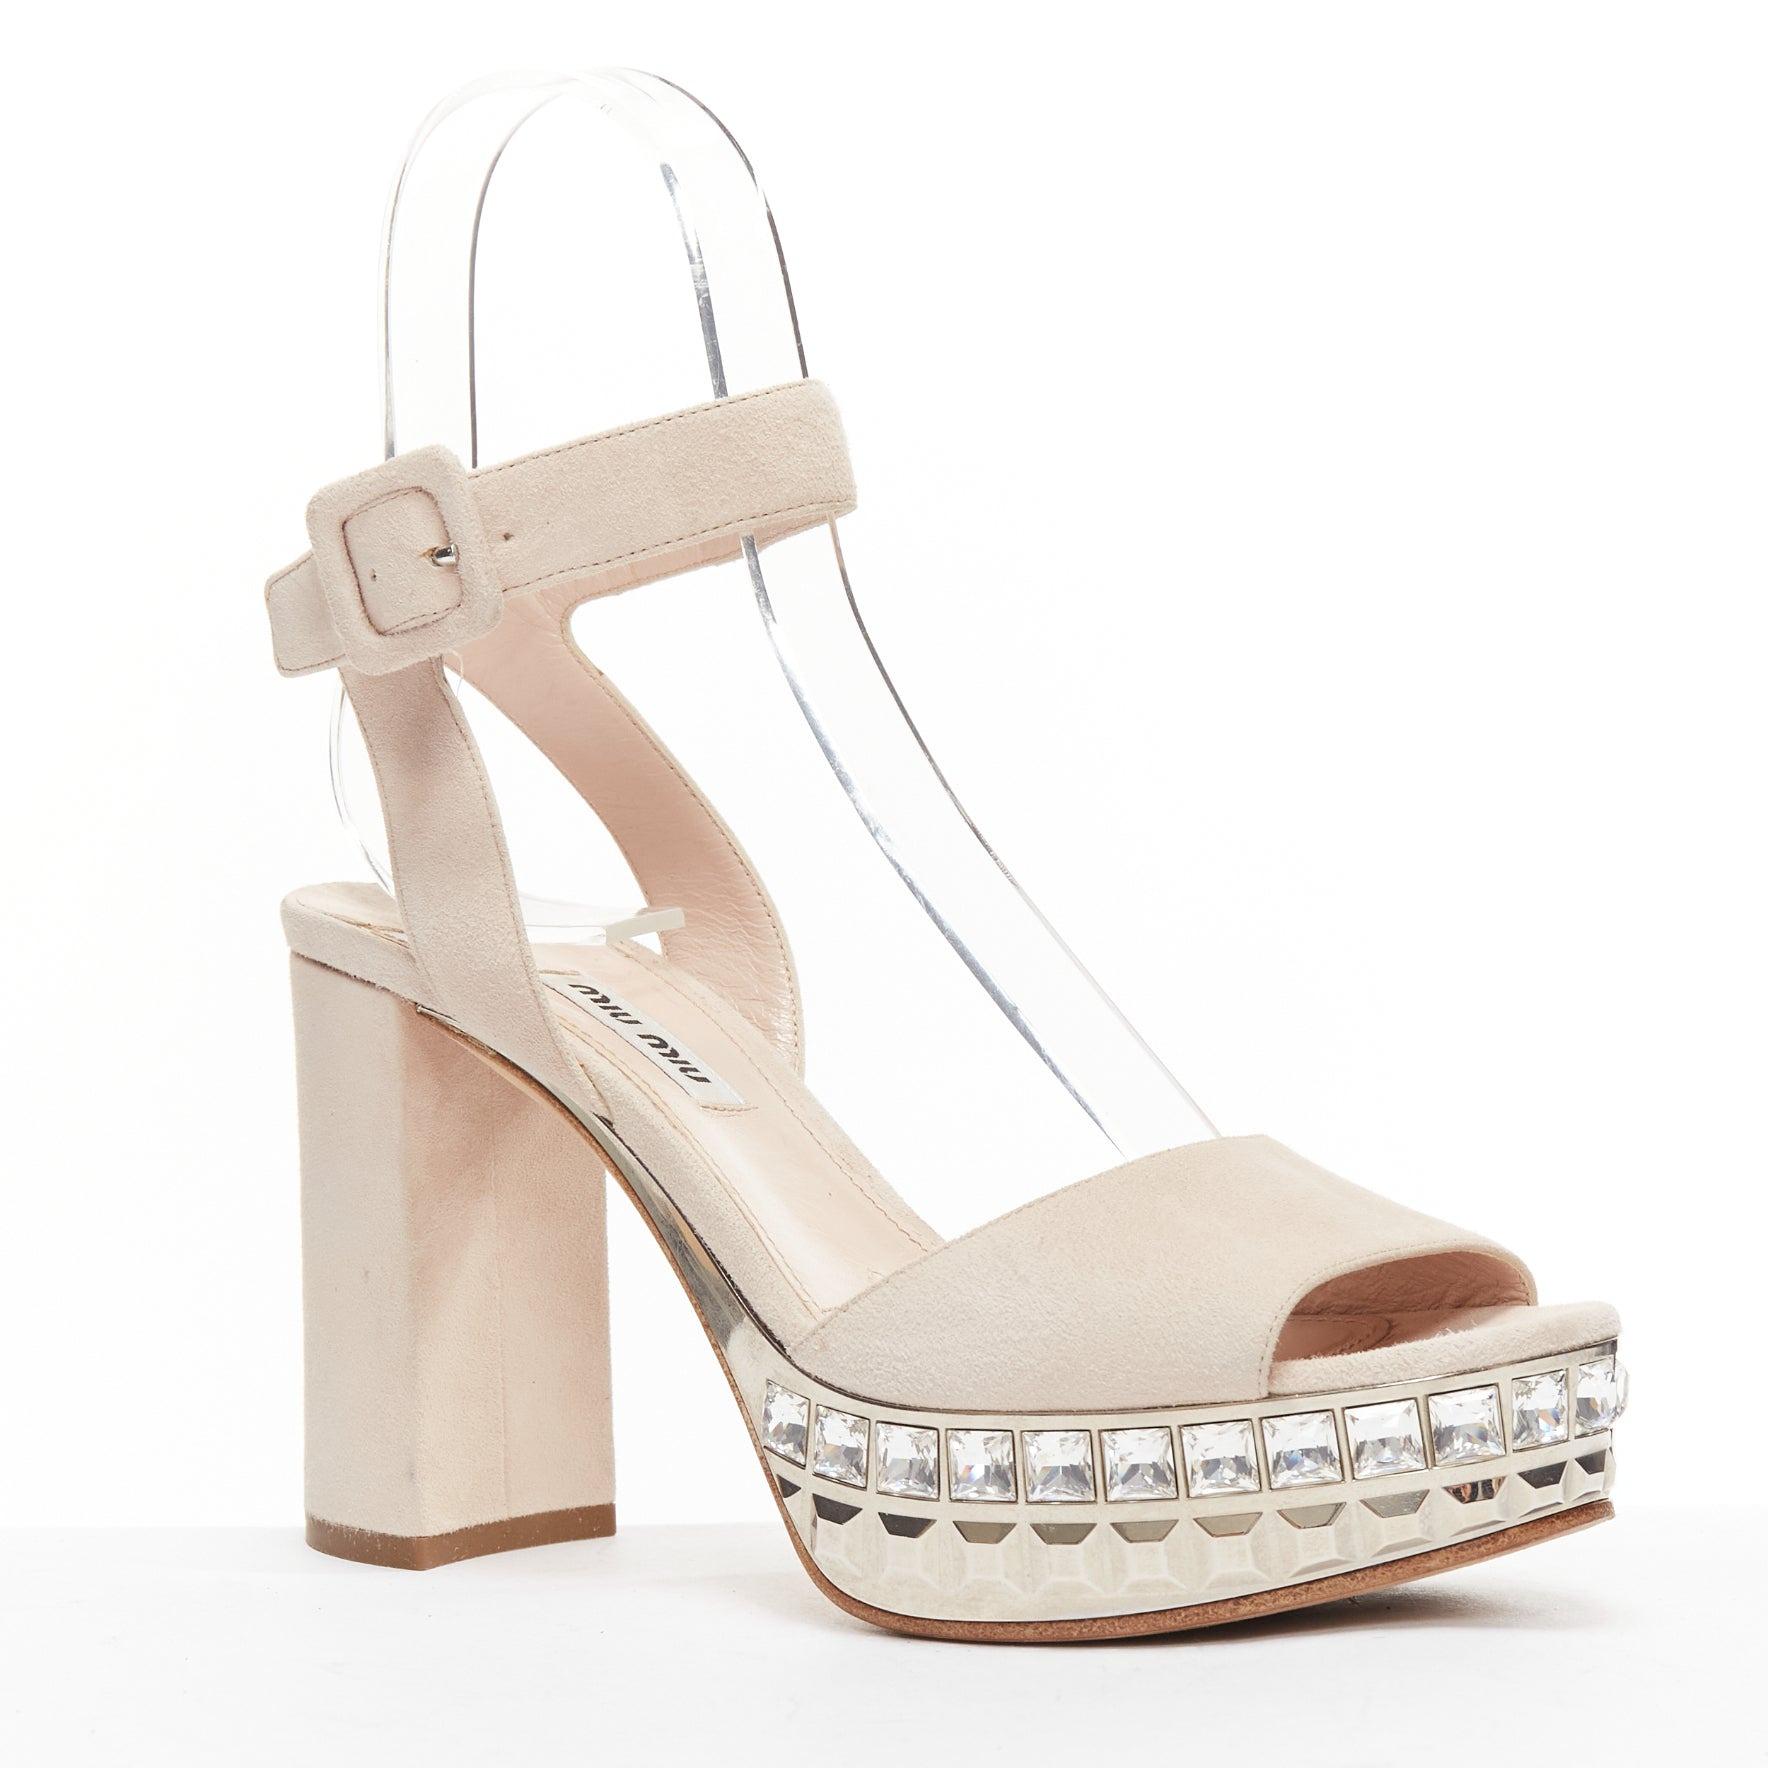 MIU MIU beige suede silver rhinestone crystals platform sandal heels EU37
Reference: GIYG/A00365
Brand: Miu Miu
Designer: Miuccia Prada
Material: Suede
Color: Nude, Silver
Pattern: Solid
Closure: Ankle Strap
Lining: Nude Leather
Made in: